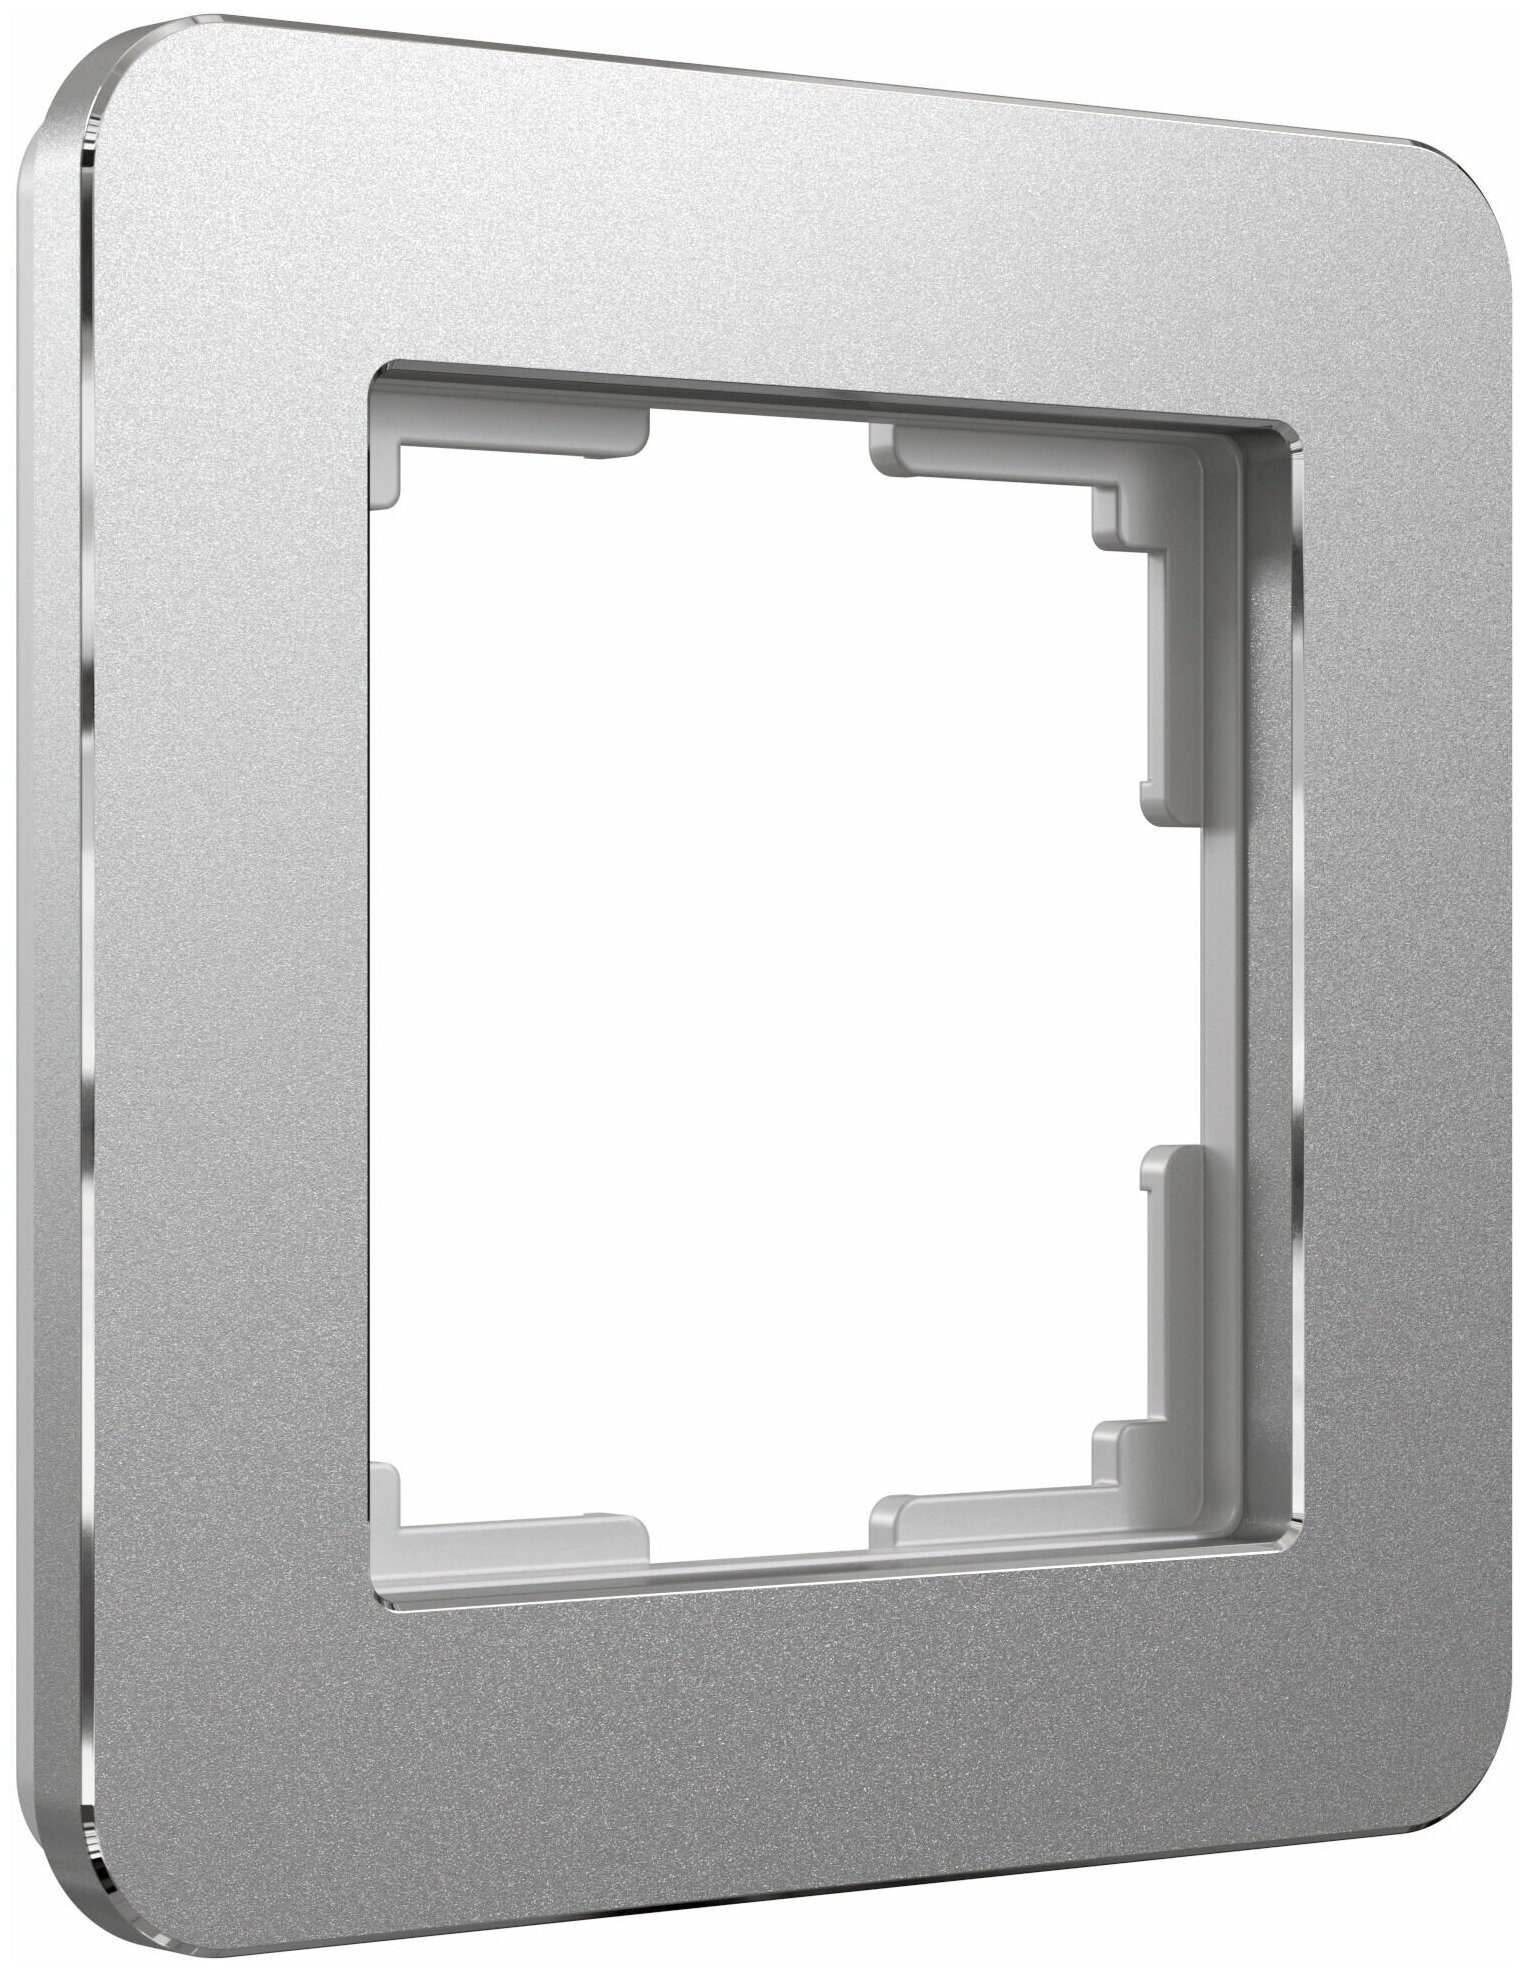 Рамка из металла на 1 пост Werkel Platinum W0012606 алюминий